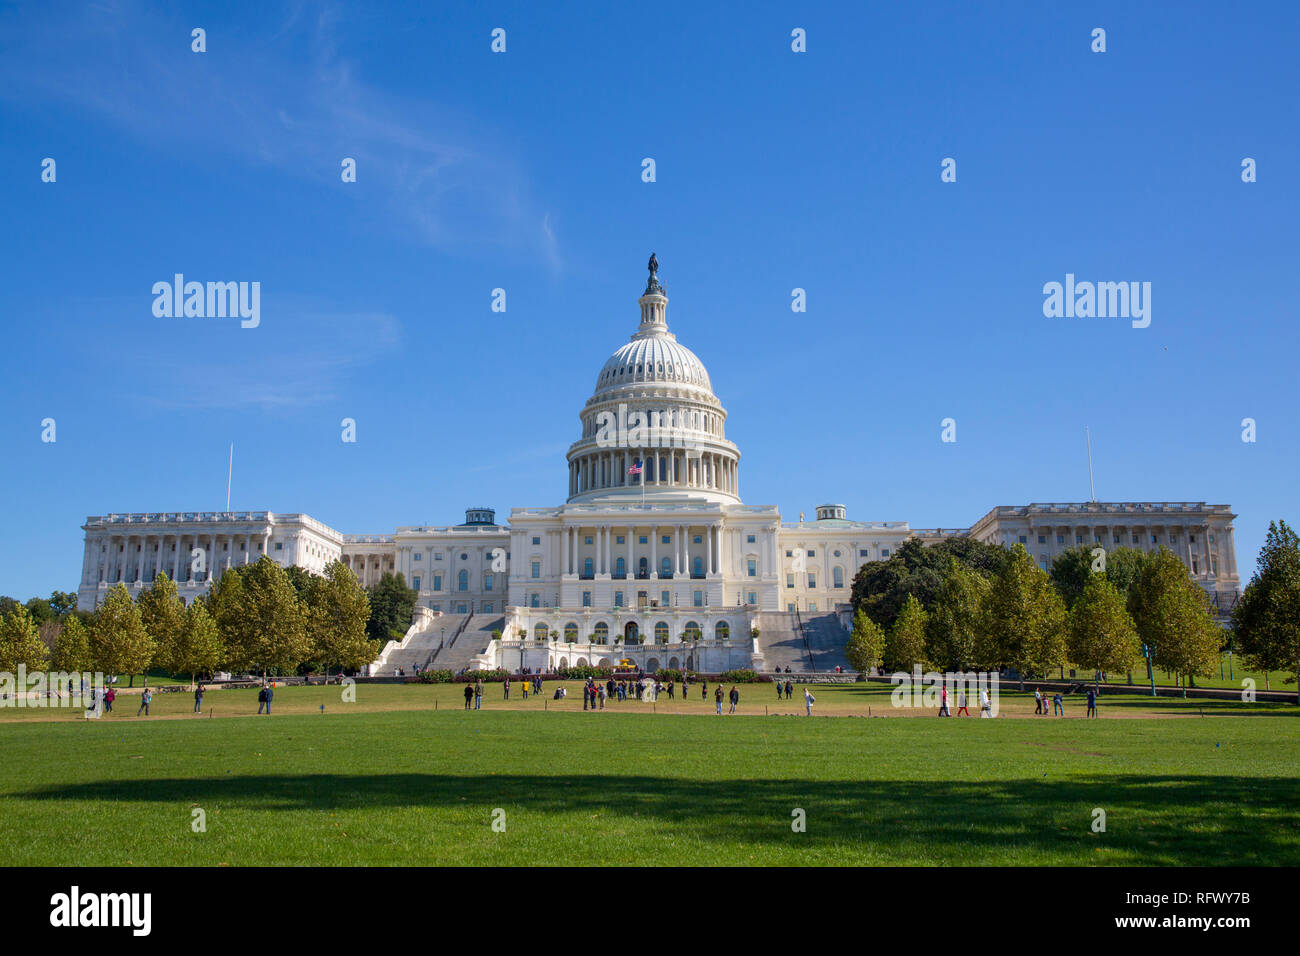 United States Capitol Building, Washington D.C., United States of America, North America Stock Photo